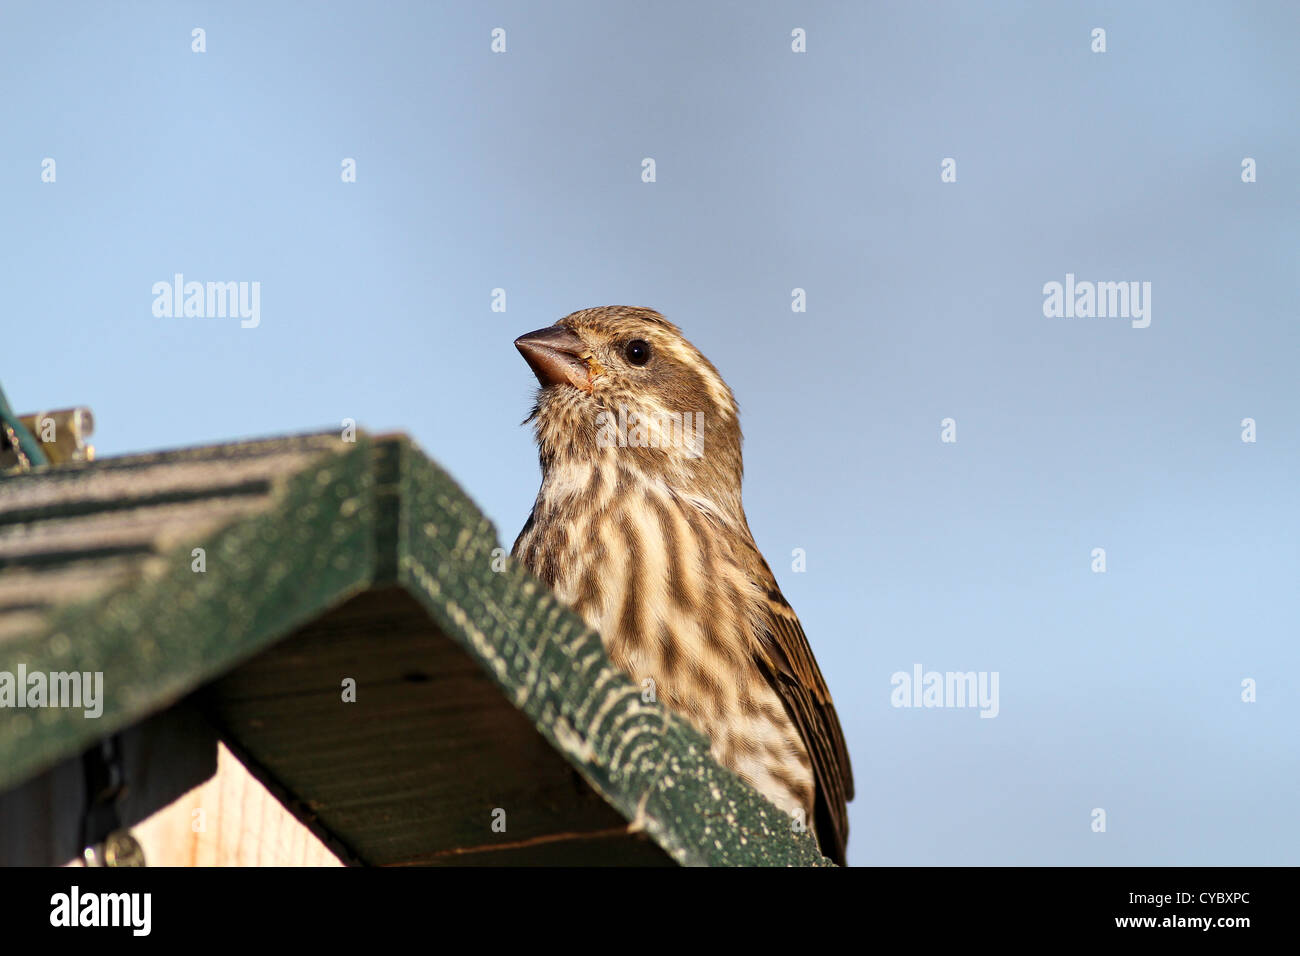 House finch on bird feeder Stock Photo